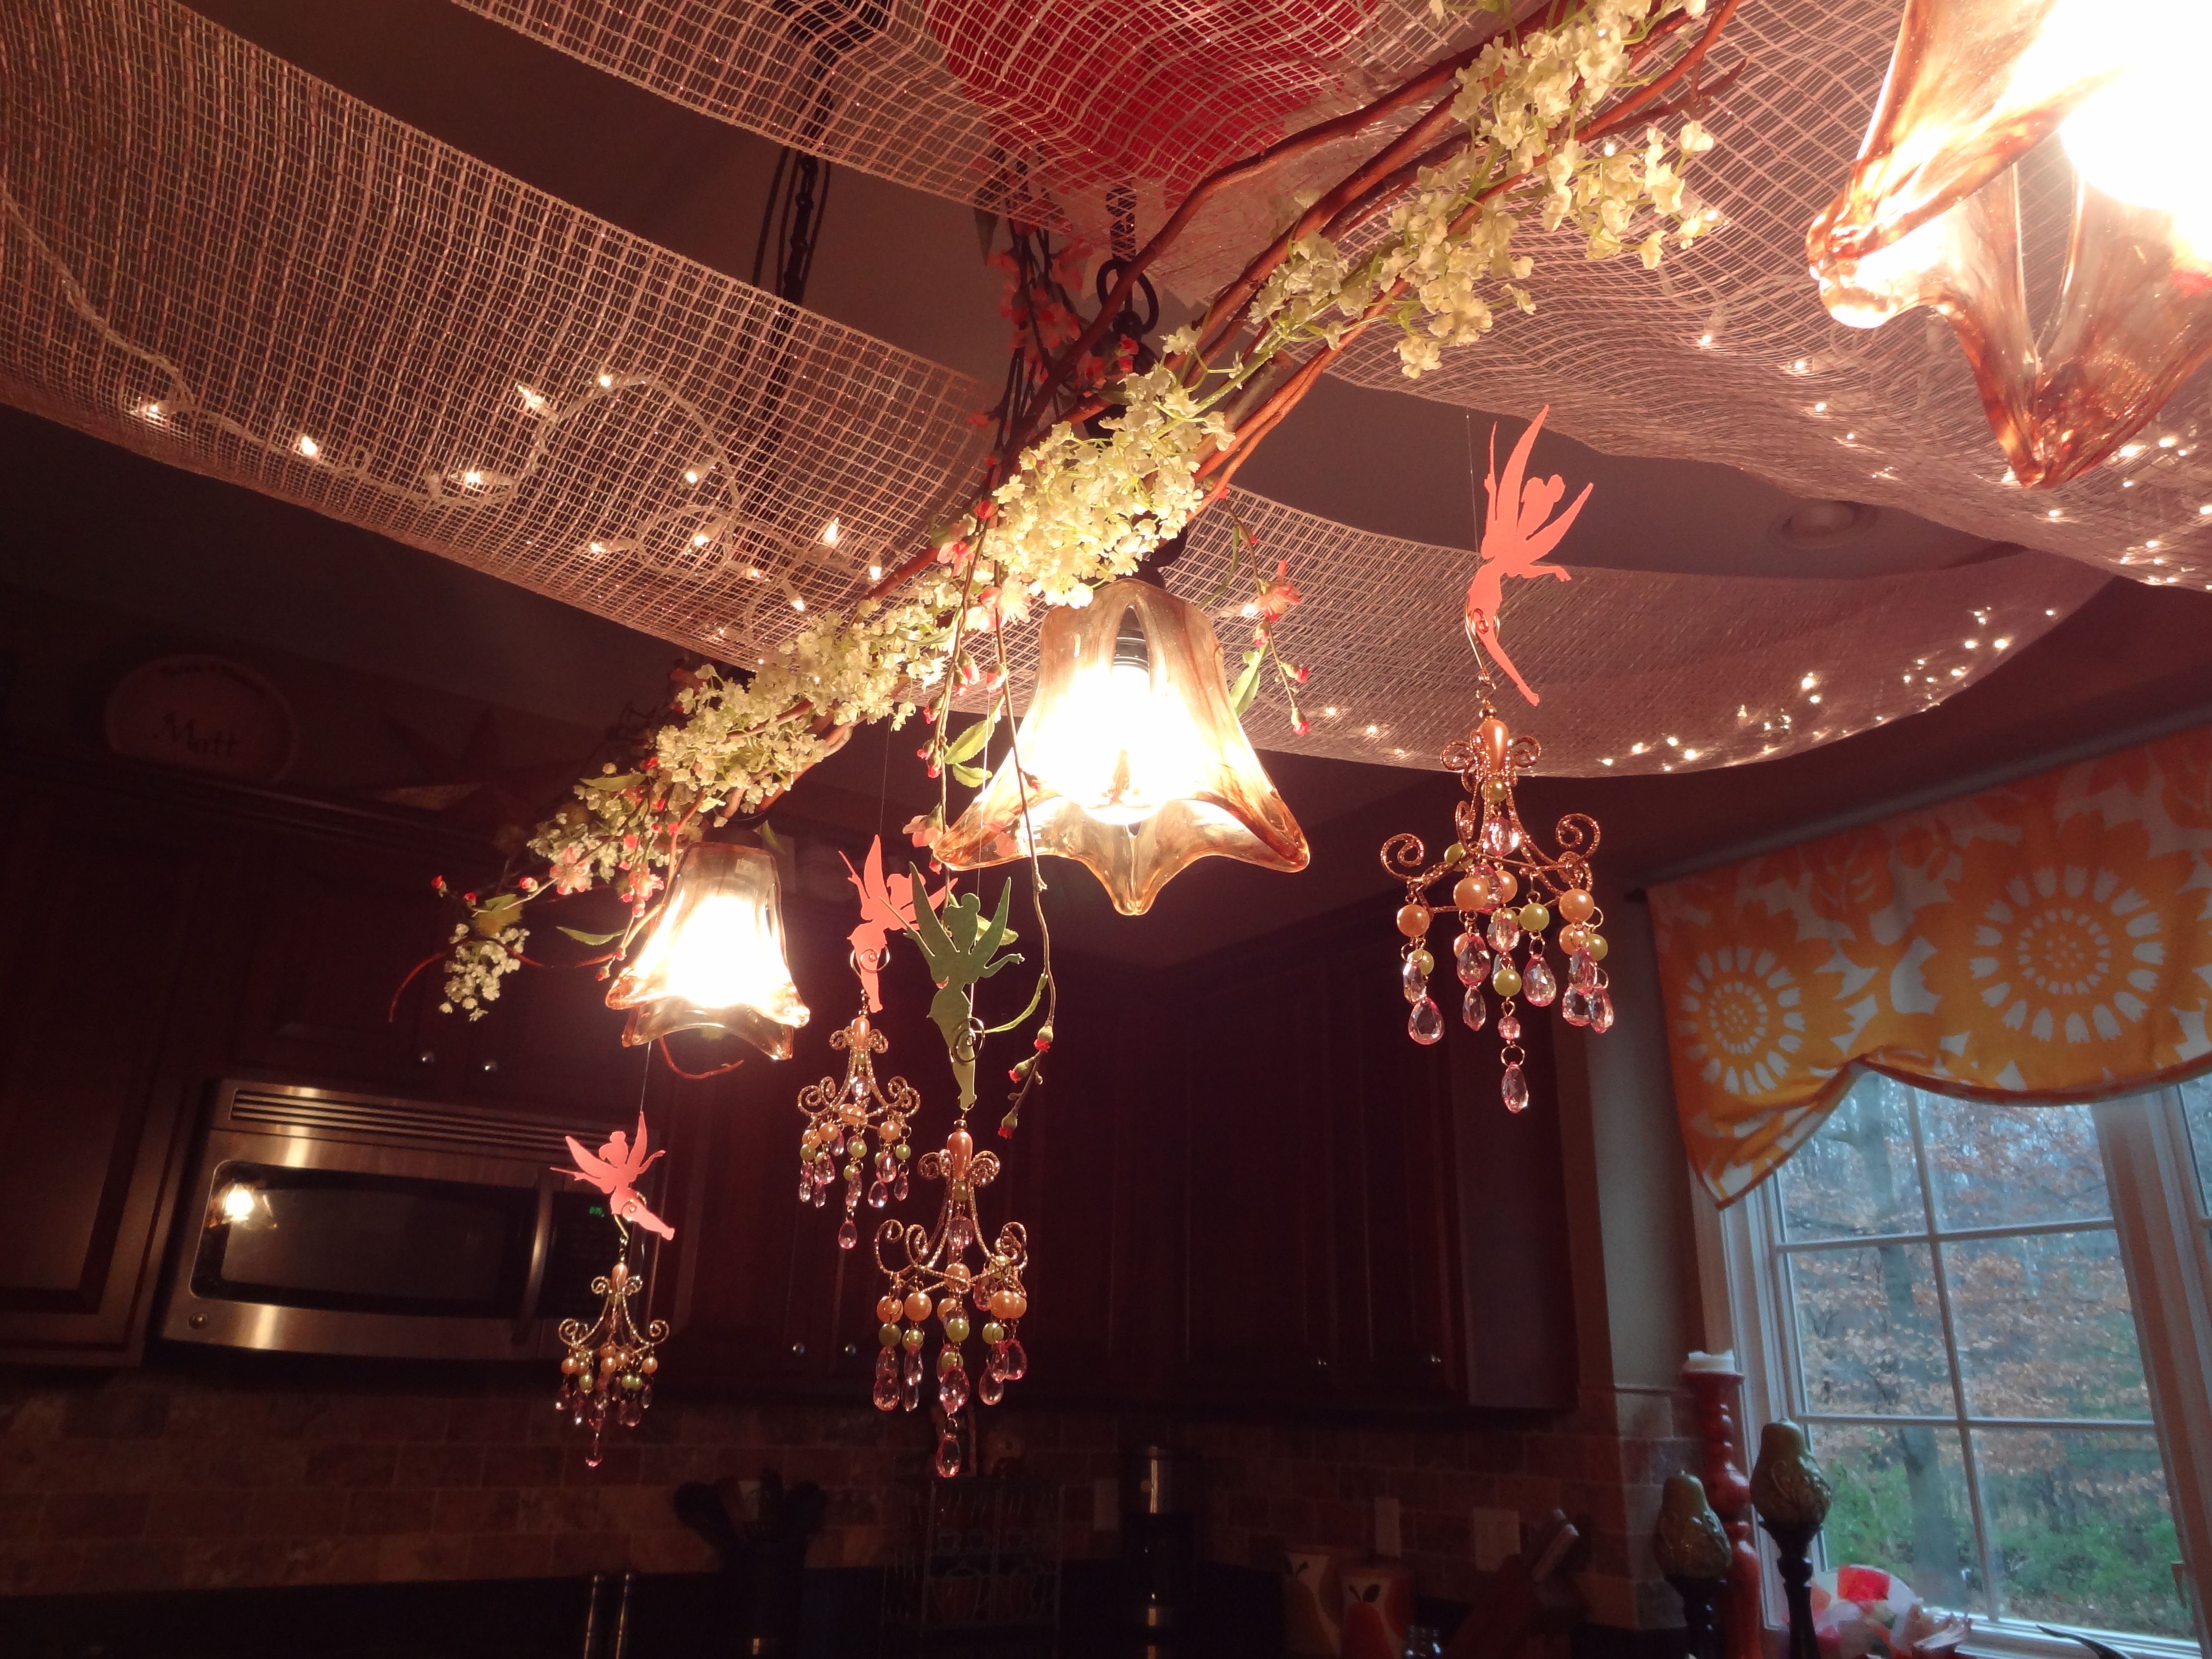 Little Fairies Dangling from Kitchen Chandelier